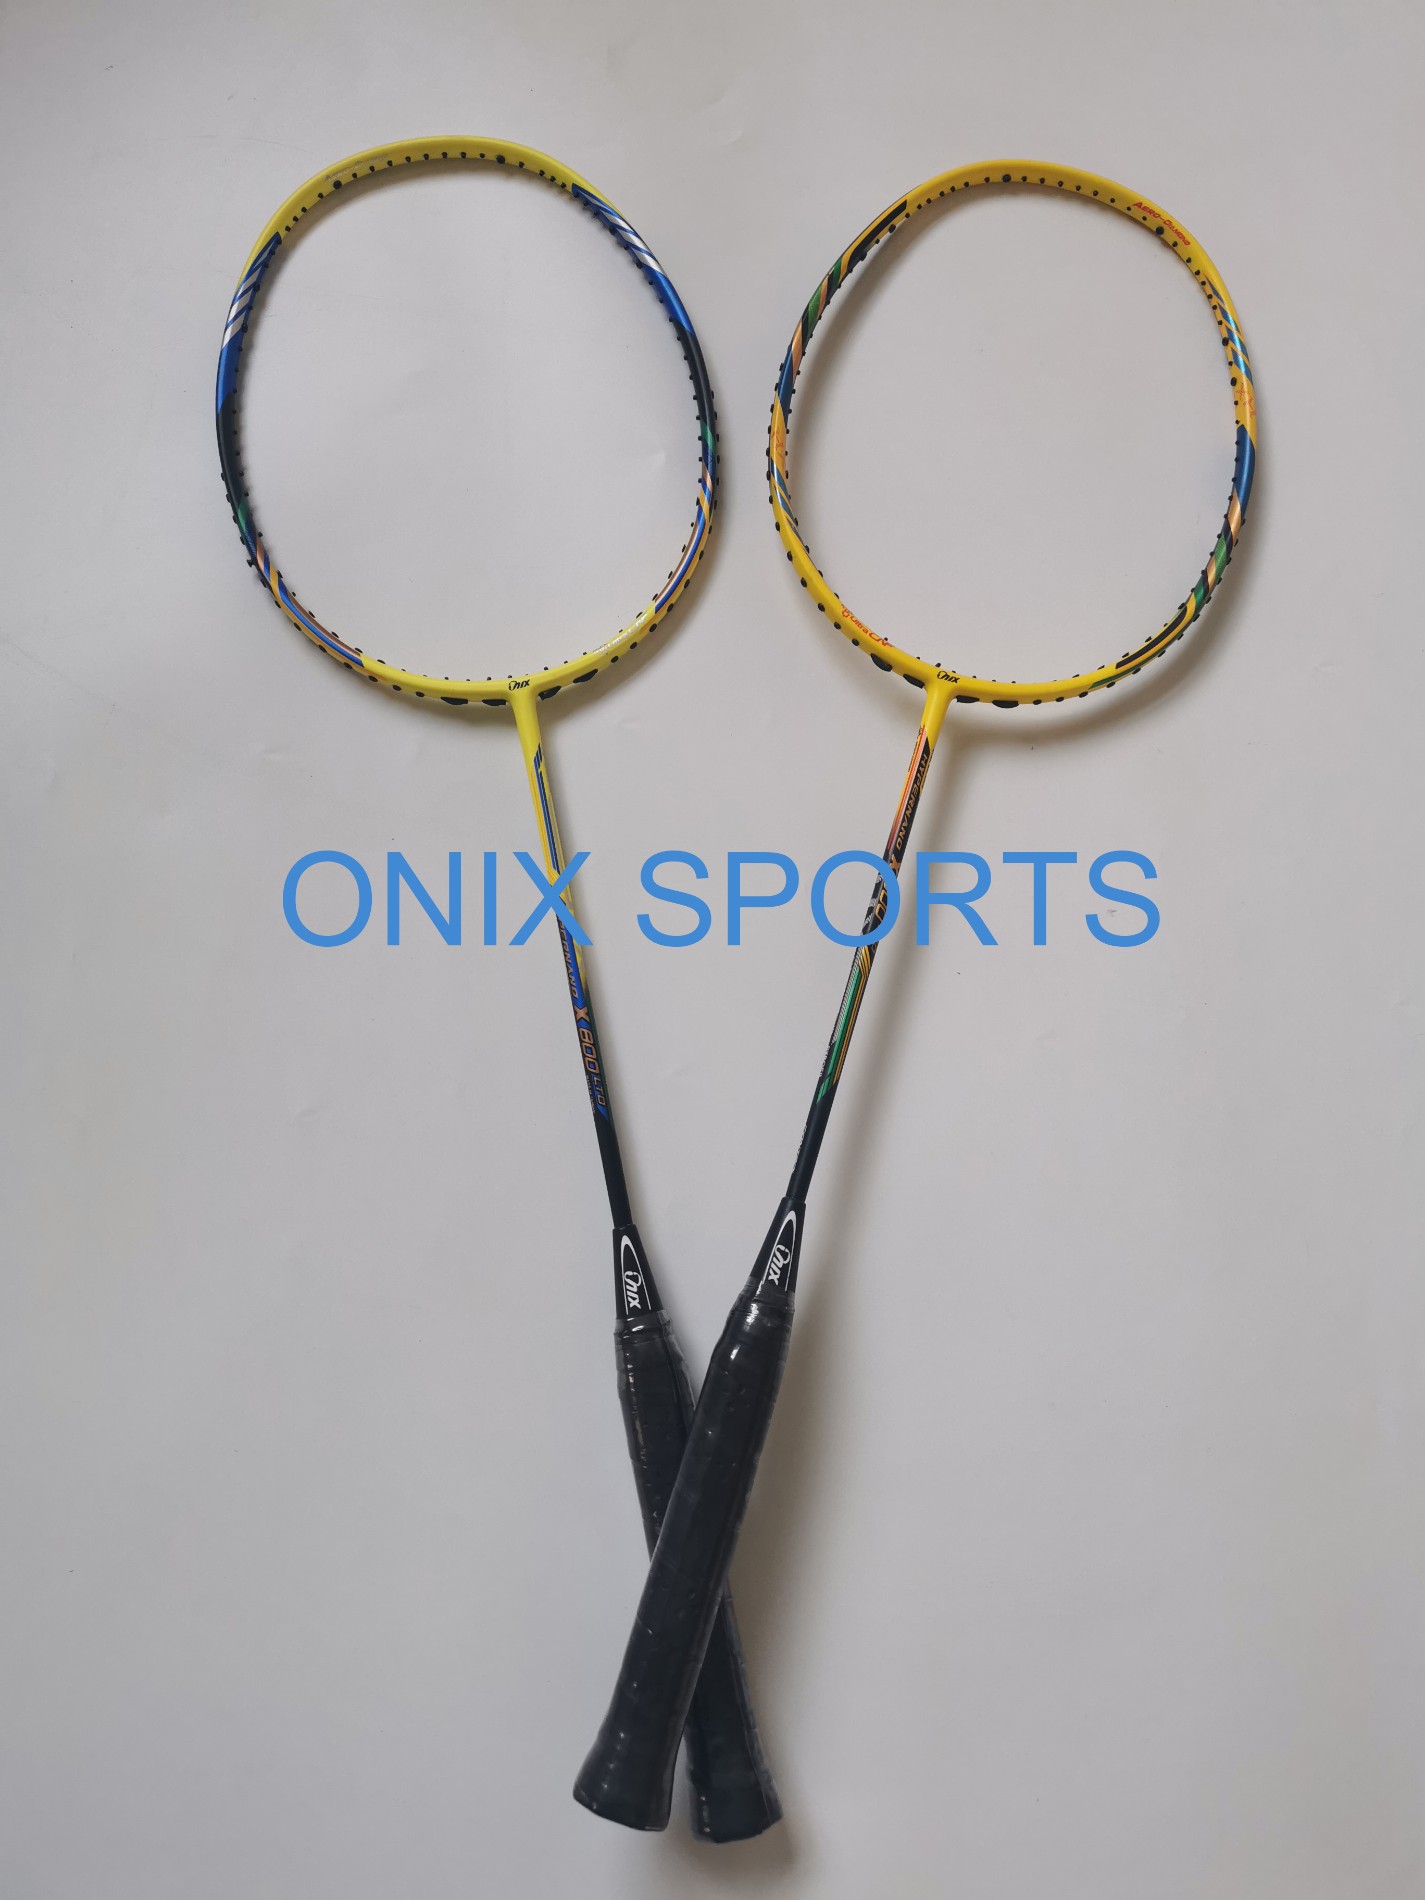 Hot sales for Carbon Badminton Racket